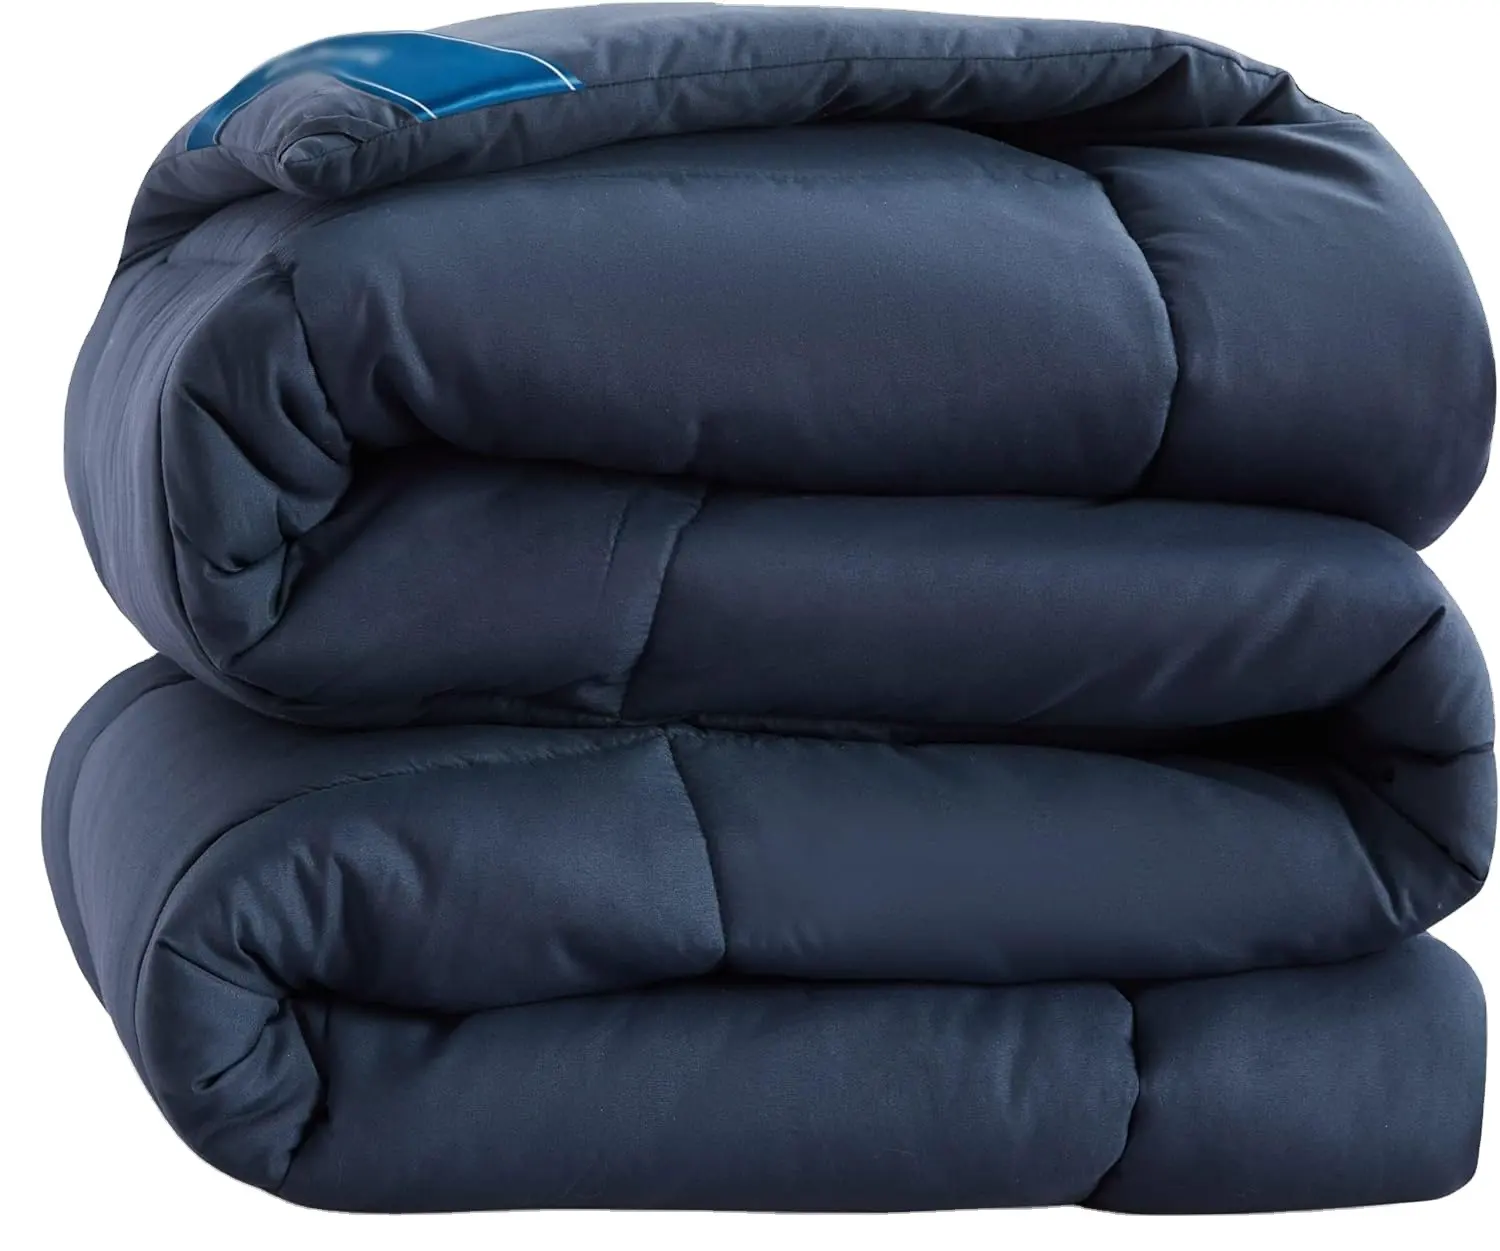 Four Season Comforter Hotel musim dingin selimut biru Microfiber tempat tidur Quilt USA UK